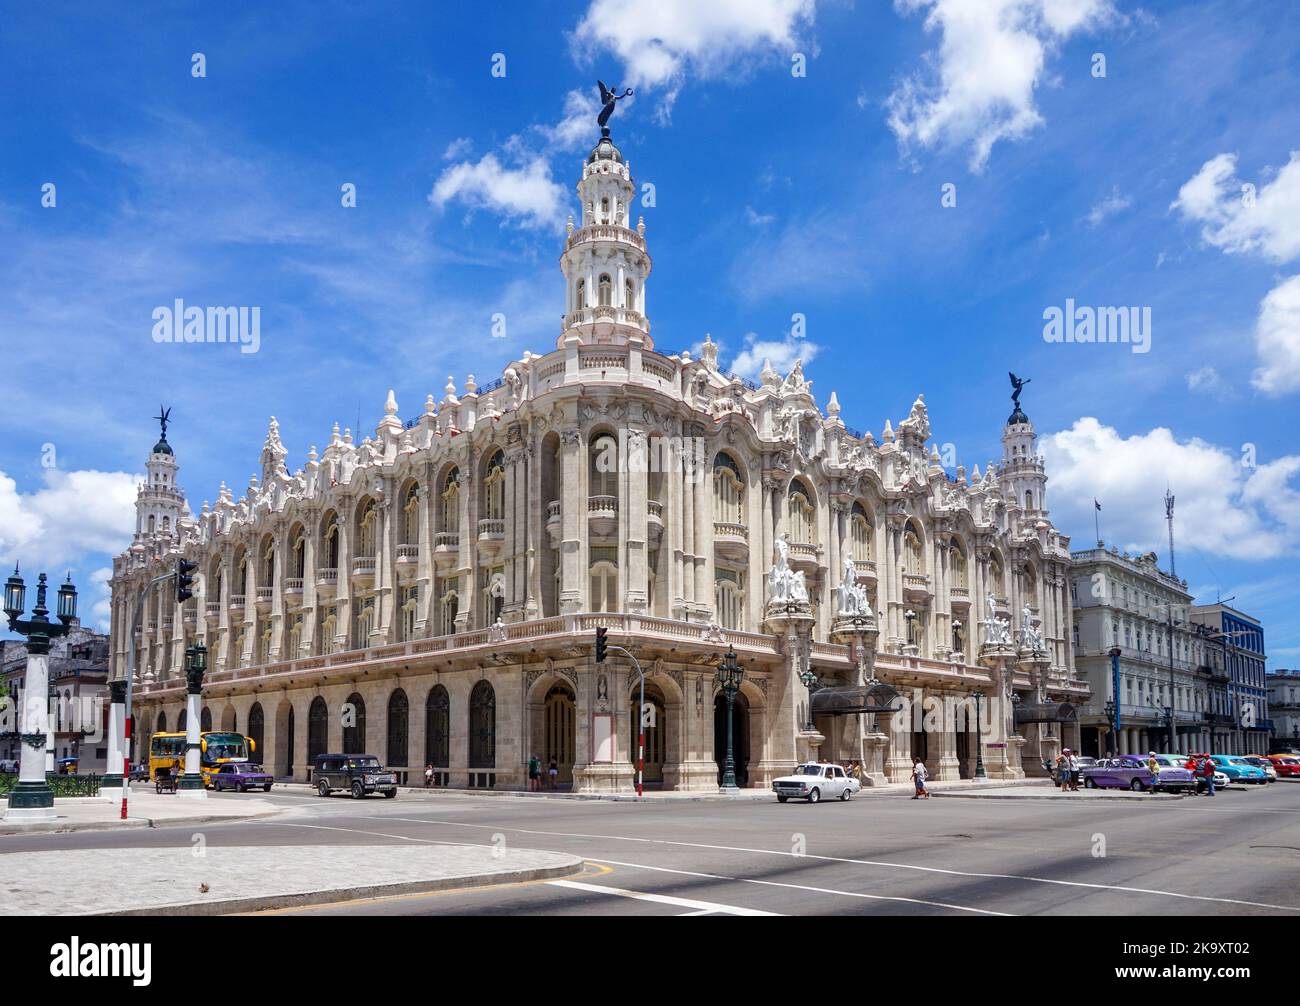 The exterior of the Gran Teatro de La Habana “Alicia Alonso”, a theater in Havana, Cuba, home to the Cuban National Ballet. Stock Photo